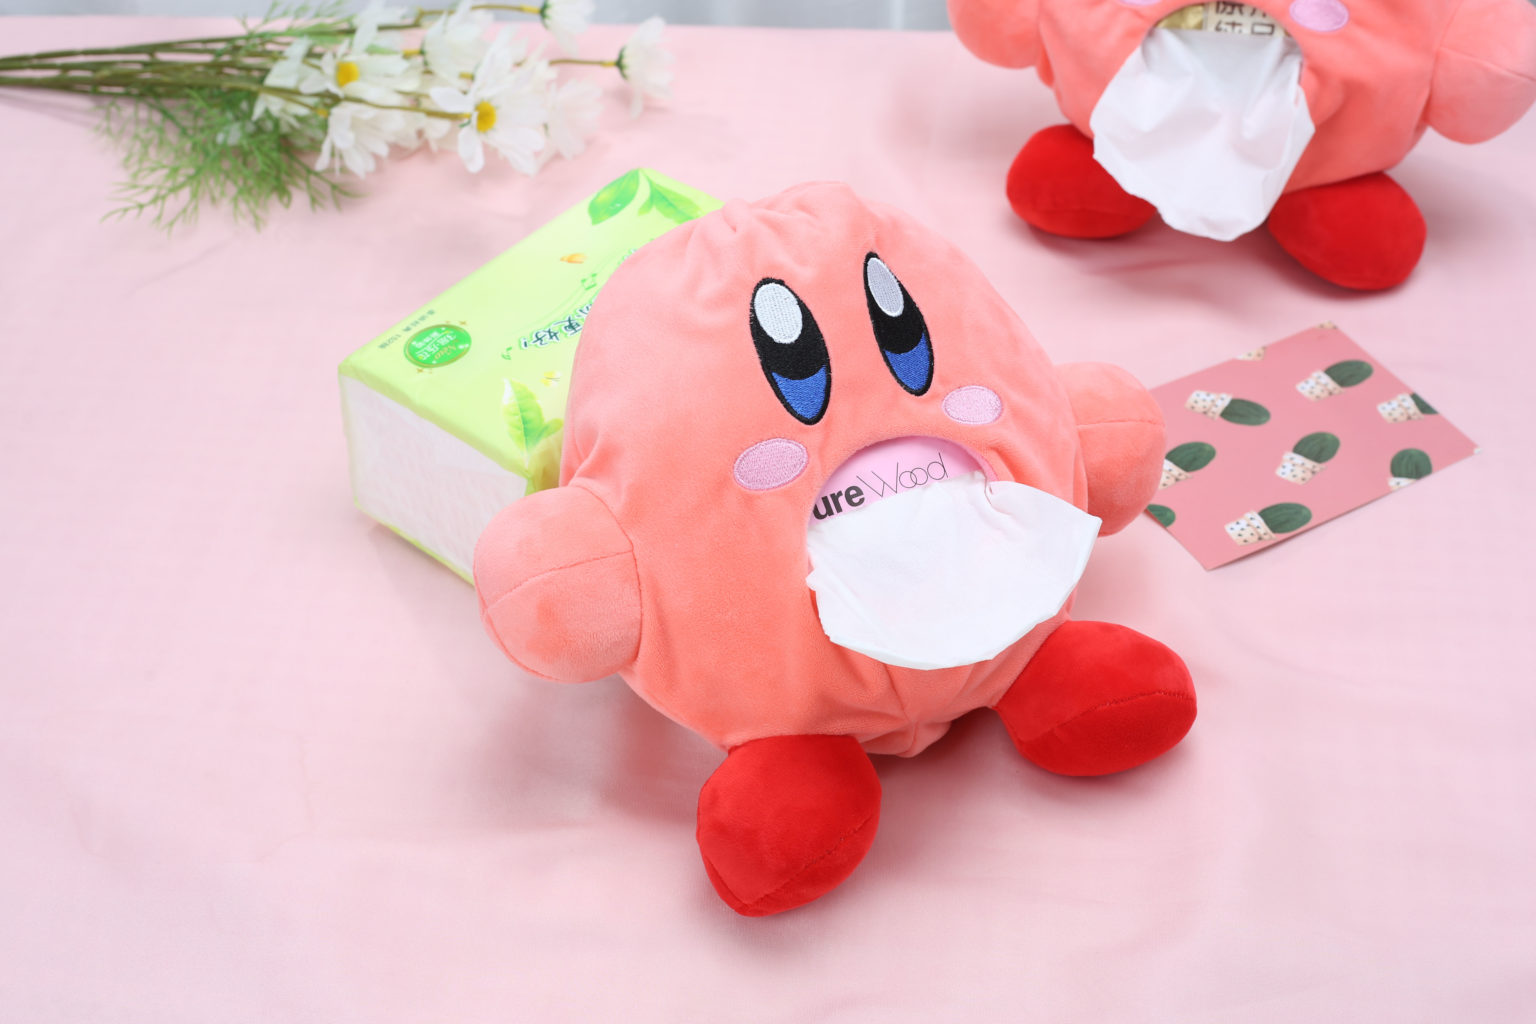 https://regisbox.com/wp-content/uploads/2022/04/Kirby-Tissue-Holder-Cute-Kirby-Tissue-Plush-Cover-Kawaii-Tissue-Box-Cover-Pink-Tissue-Case-Kirby-Plushie-5-1536x1024.jpg